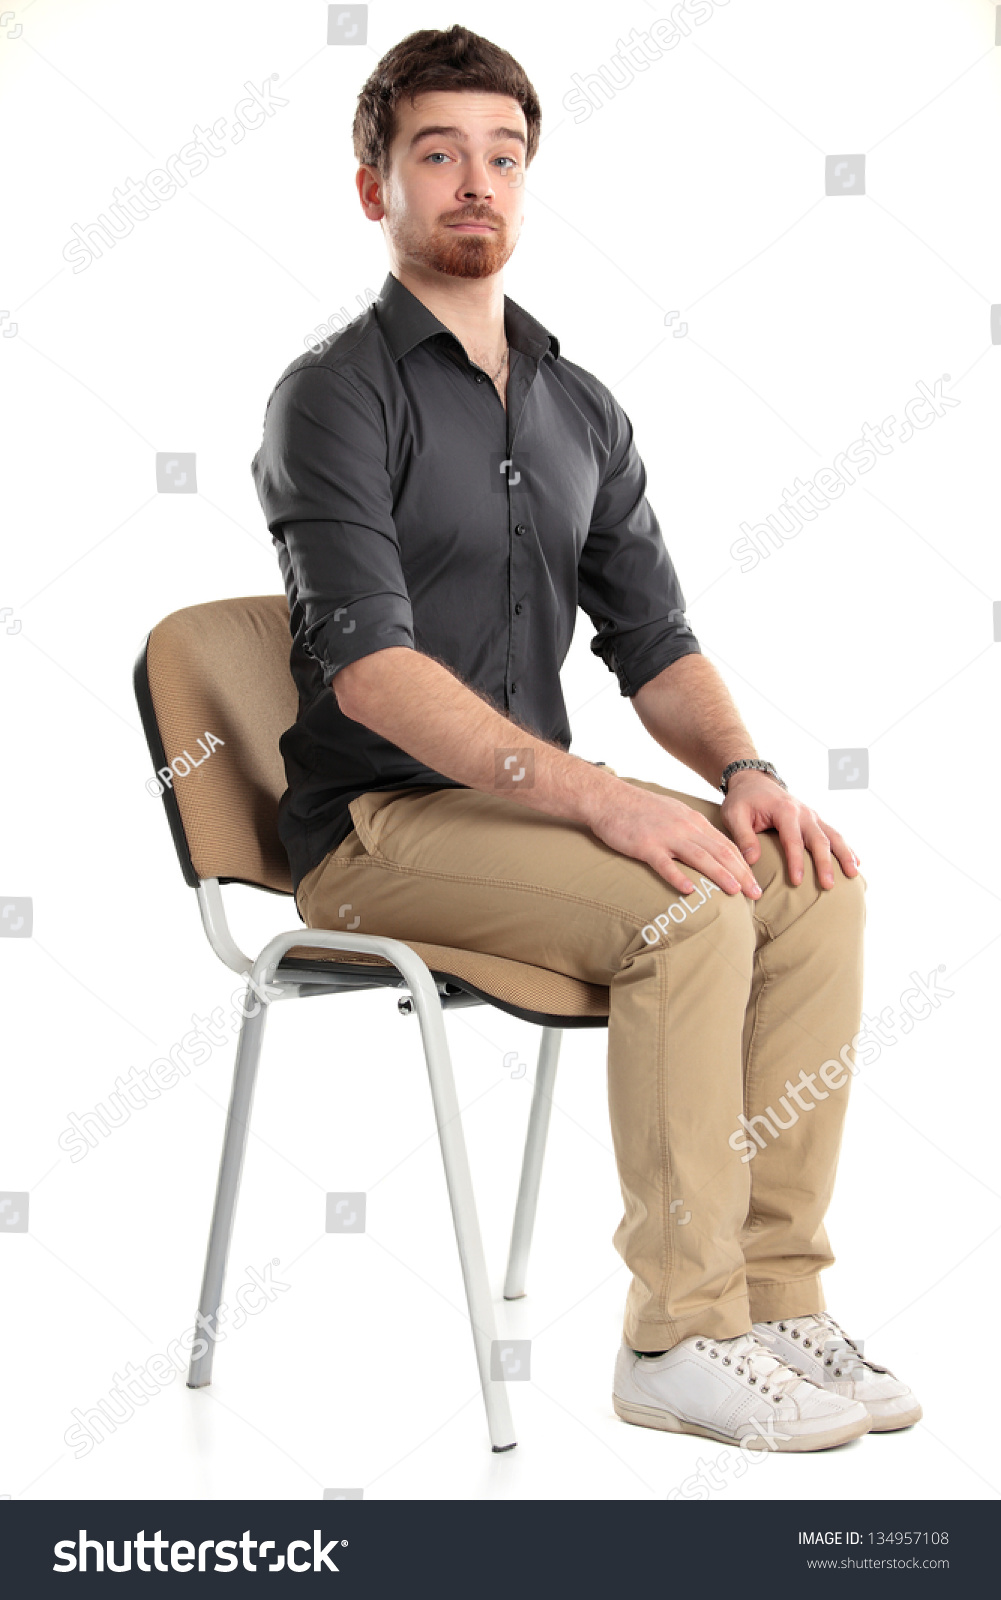 человек сидит на стуле боком